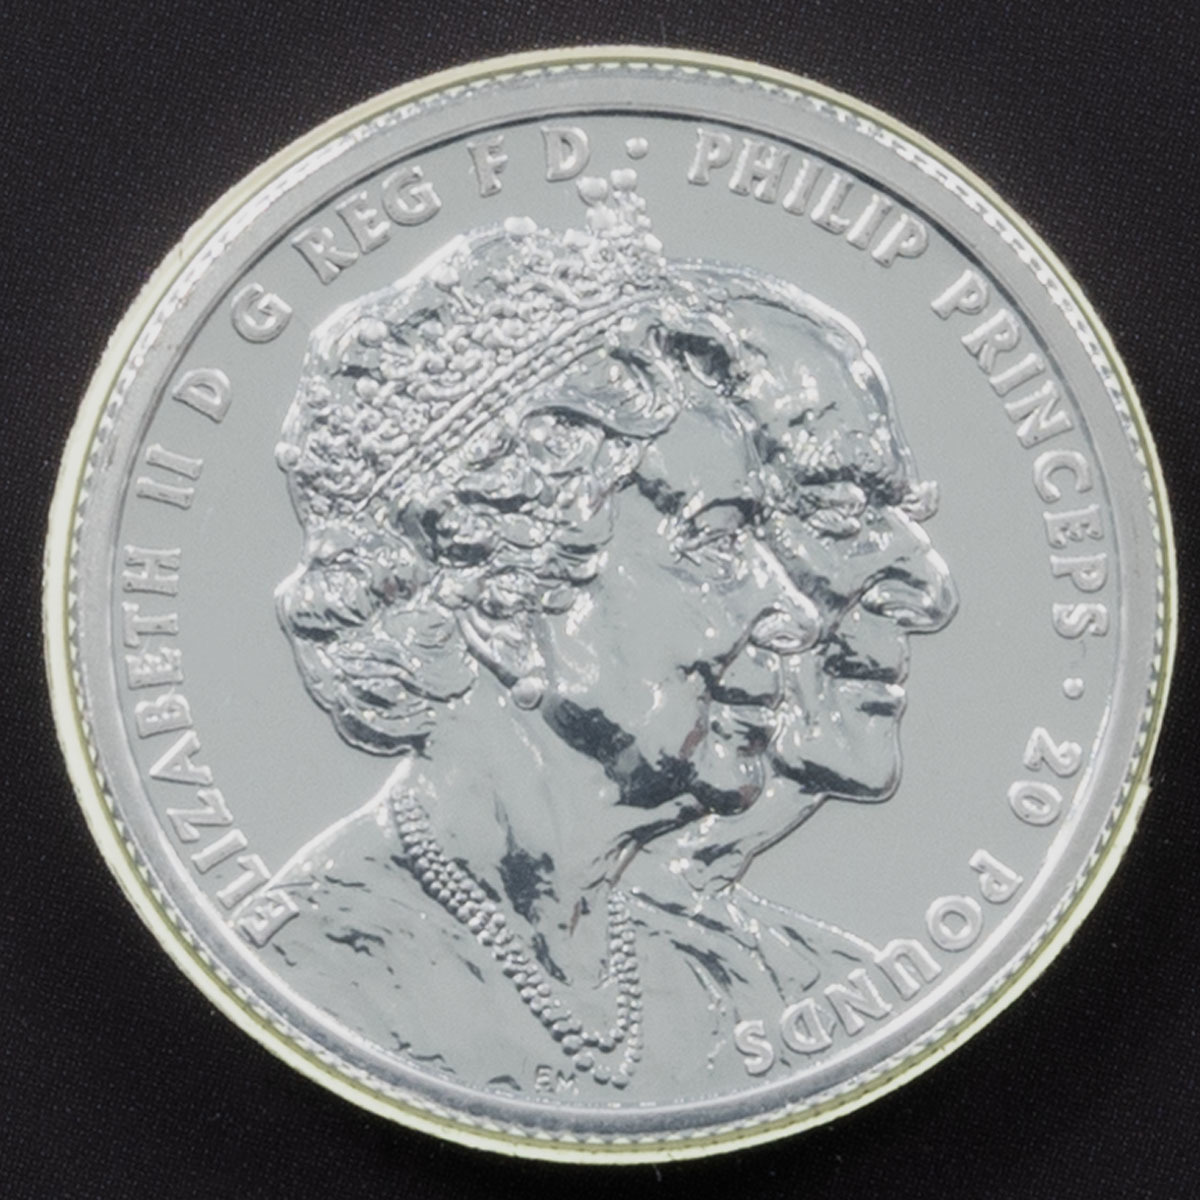 UK1720PW 2017 Platinum Wedding Queen Elizabeth II Prince Philip Duke Of Edinburgh Twenty Pound Brilliant Uncirculated Coin In Folder Obverse